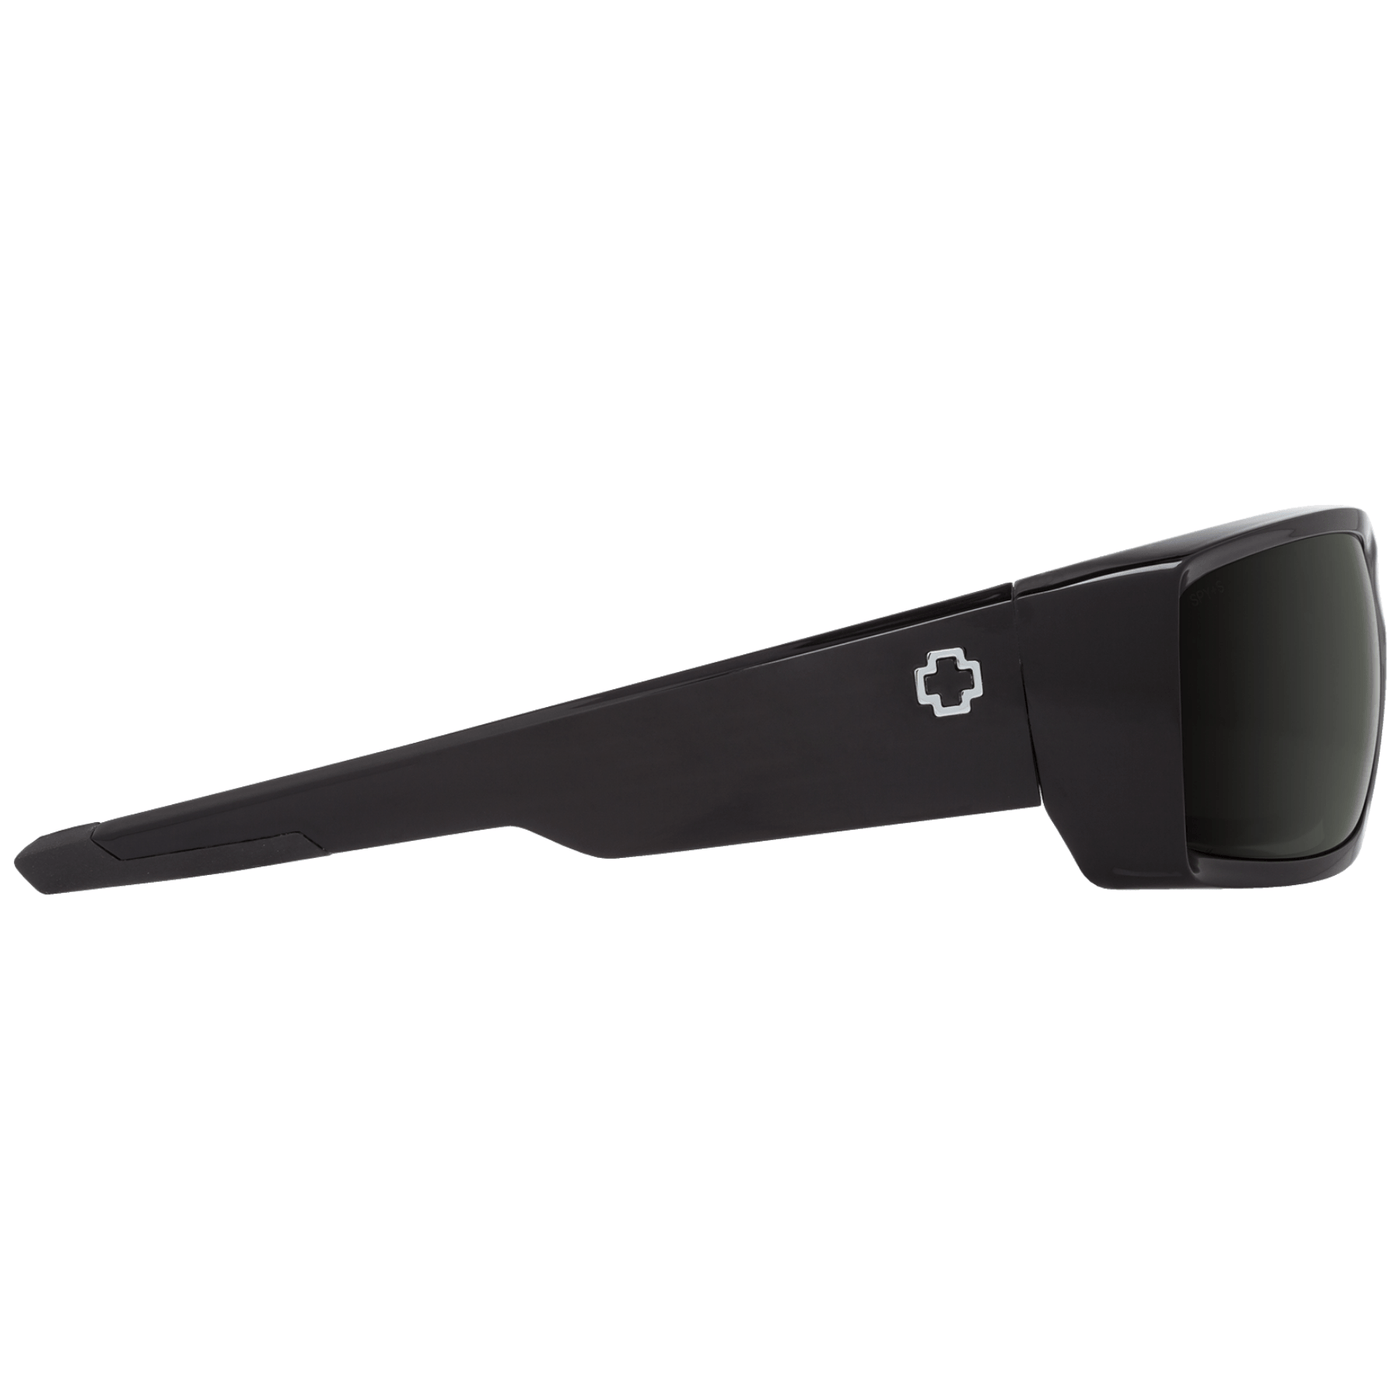 SPY GENERAL Sunglasses, ANSI Z87.1, Happy Lens - Black 8Lines Shop - Fast Shipping